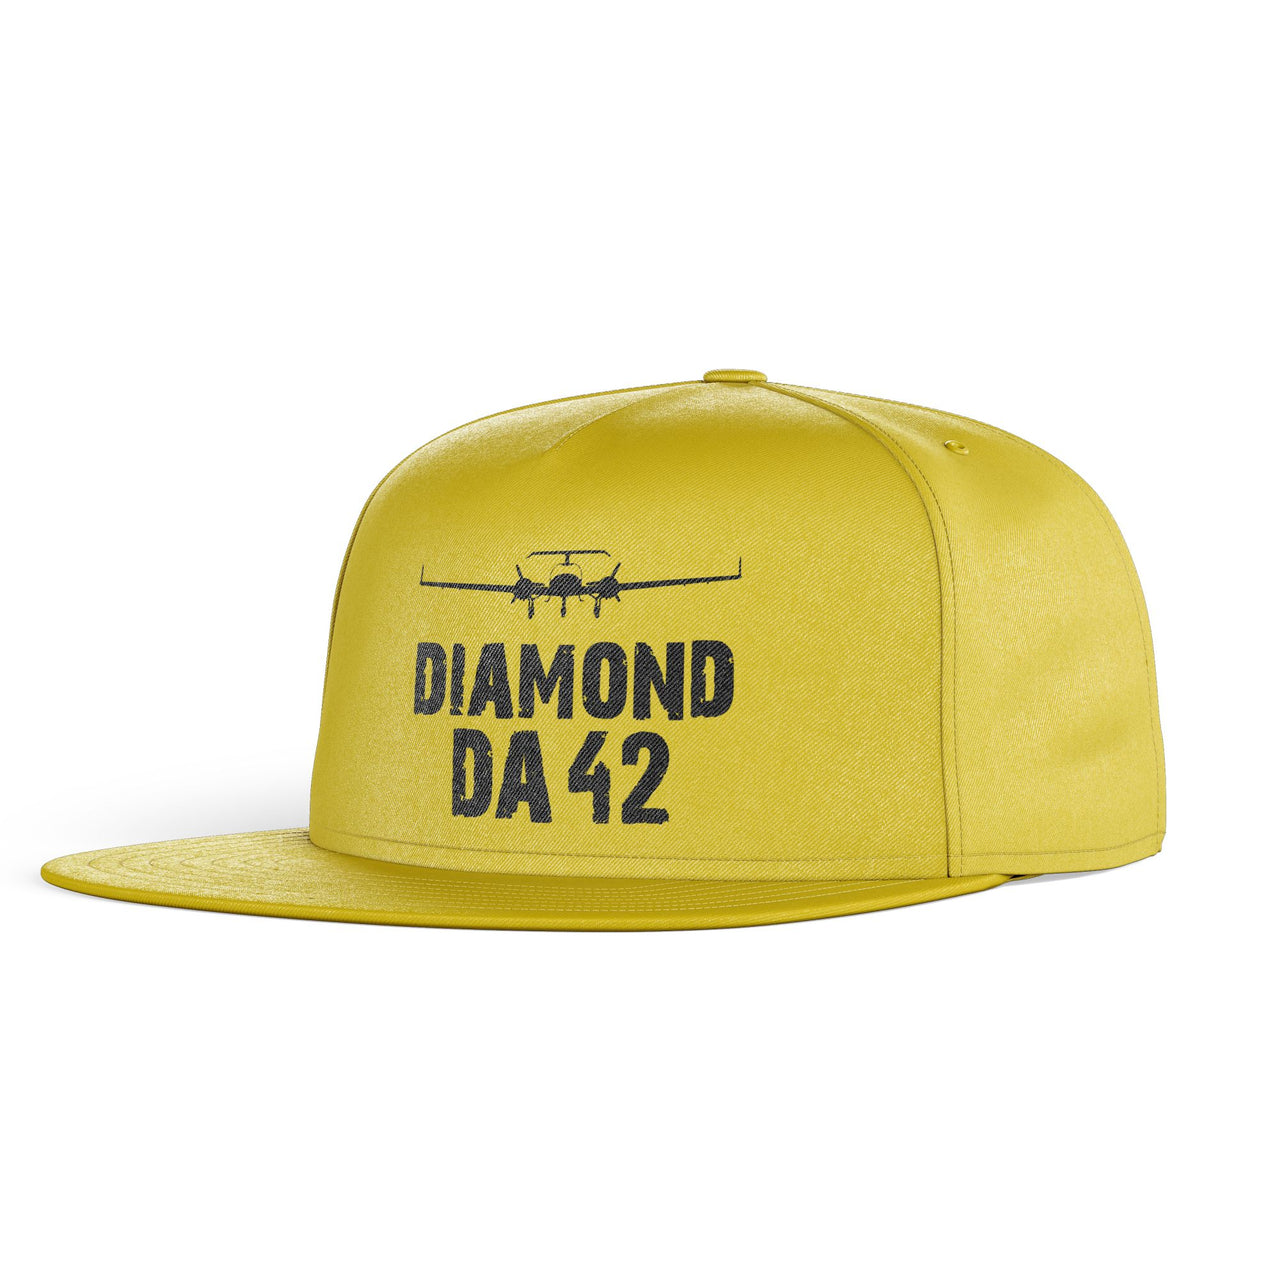 Diamond DA42 & Plane Designed Snapback Caps & Hats